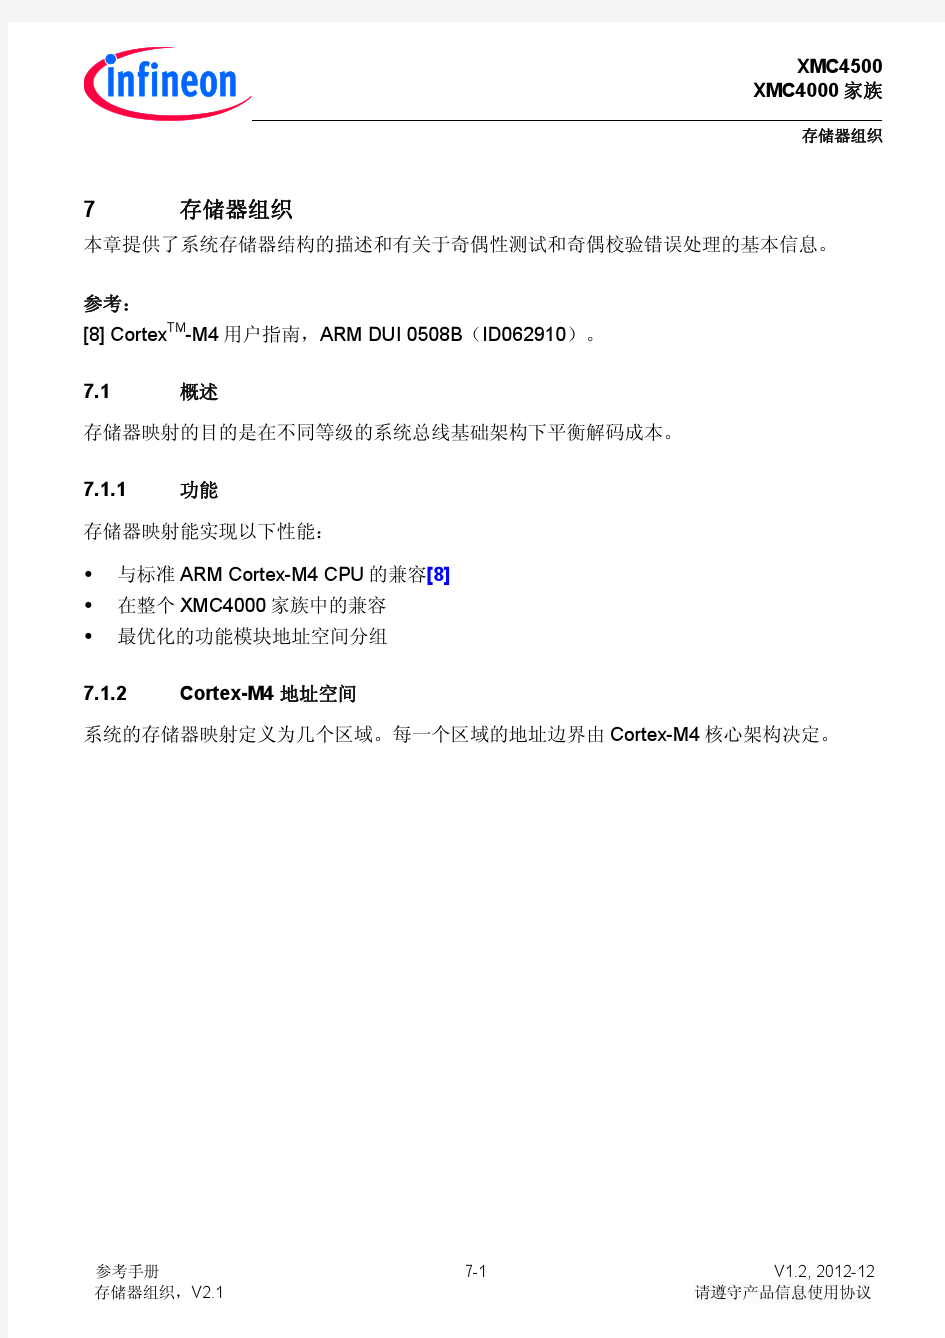 XMC4000中文参考手册-第07章 存储器组织